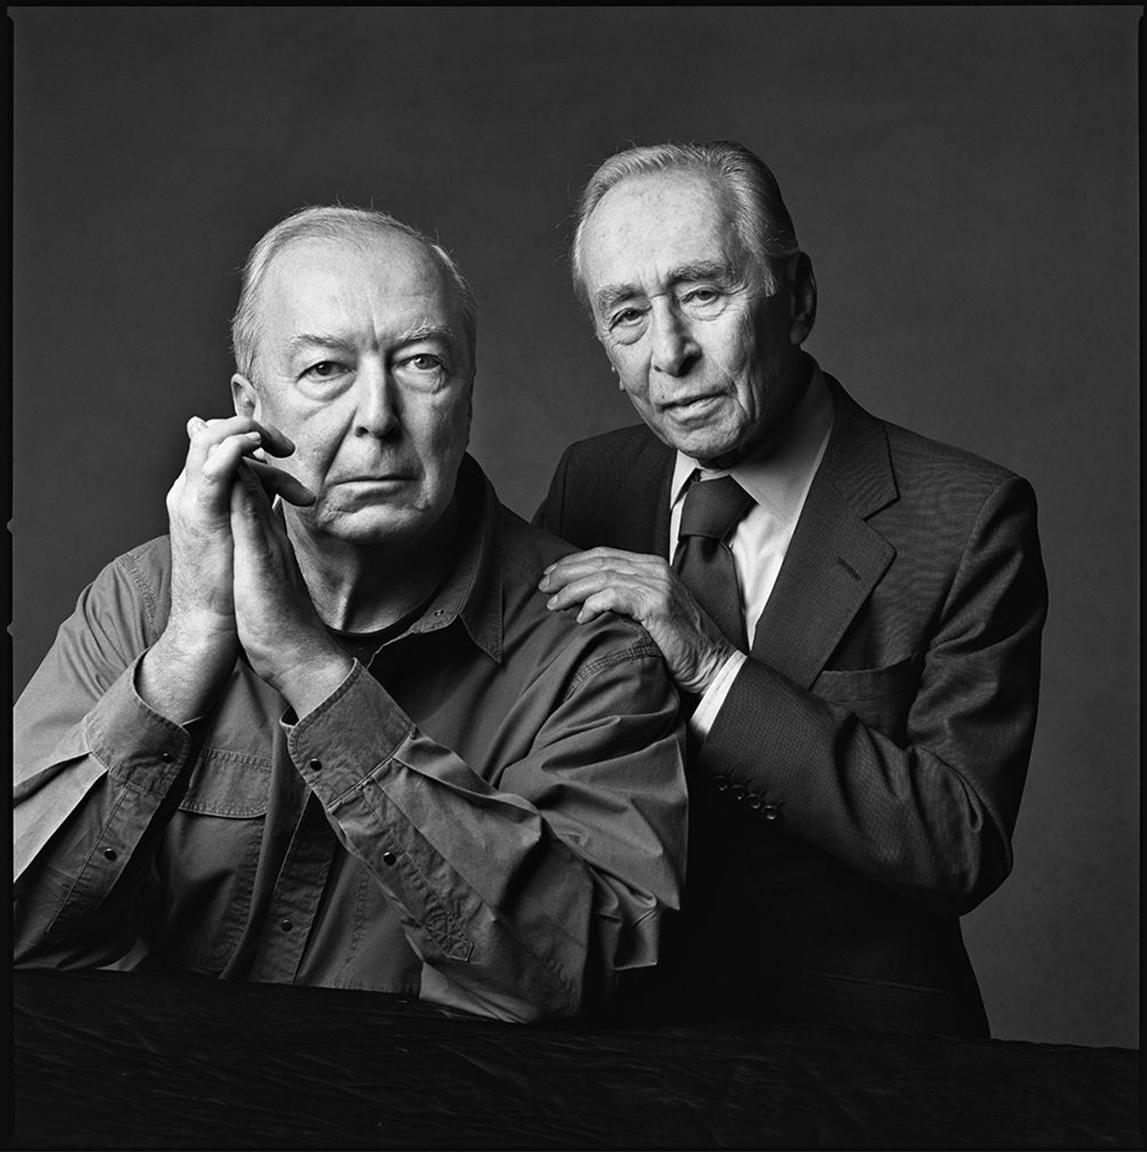 Leo Castelli and Jasper Johns, New York, 1993 - Photograph by Patrick Demarchelier